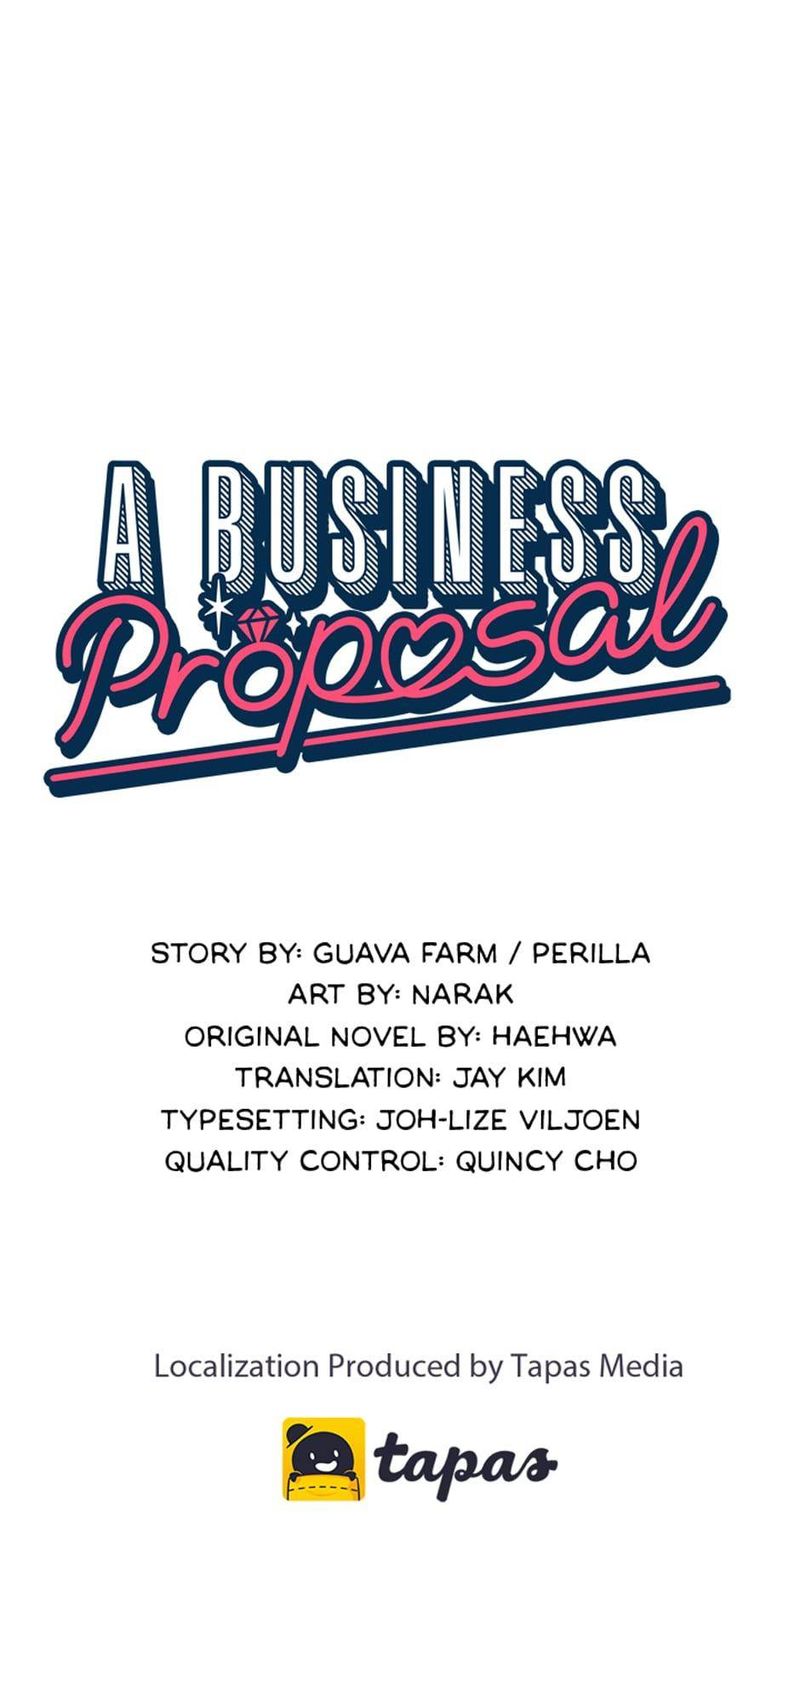 A Business Proposal 20 19